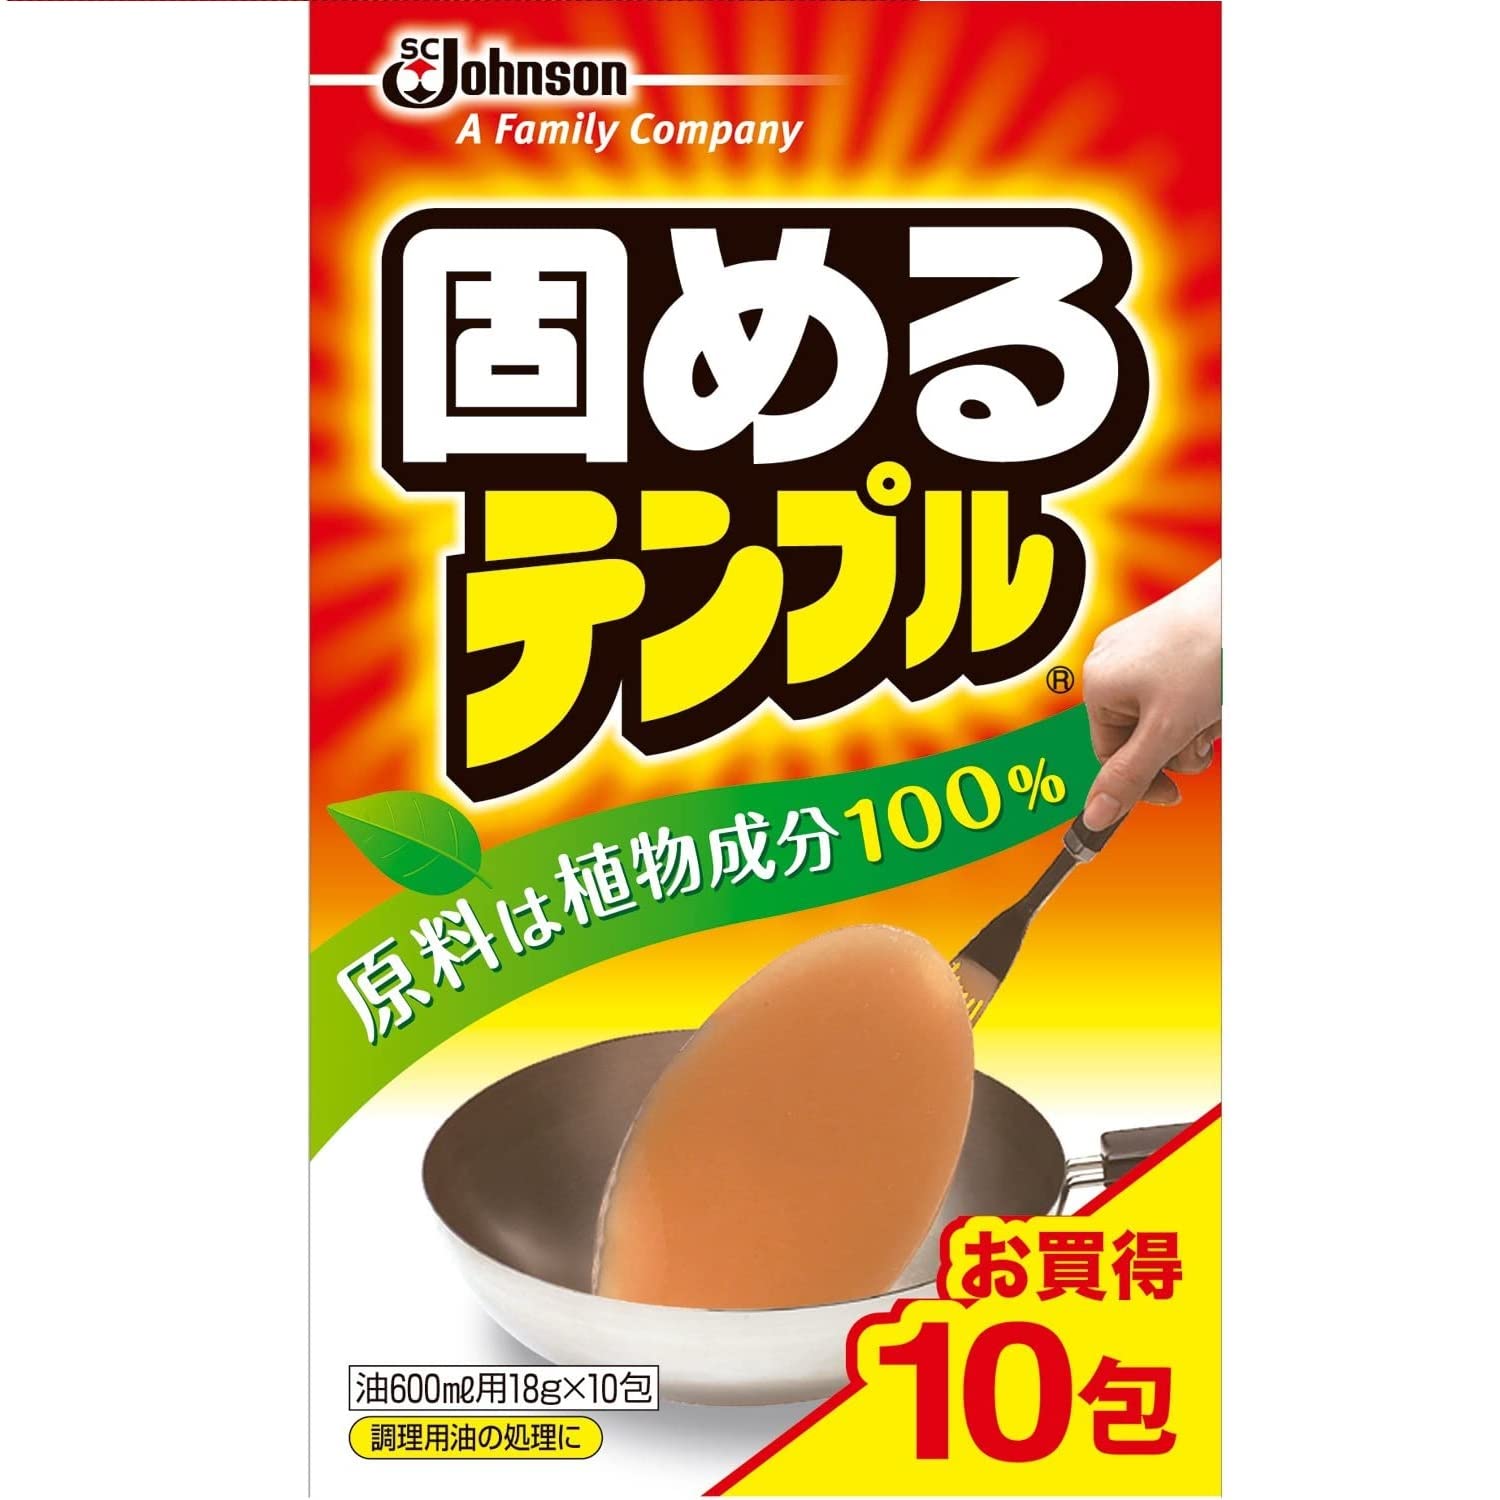 Johnson 日本庄臣 食用废油凝固处理剂100%植物成分（18g×10包）